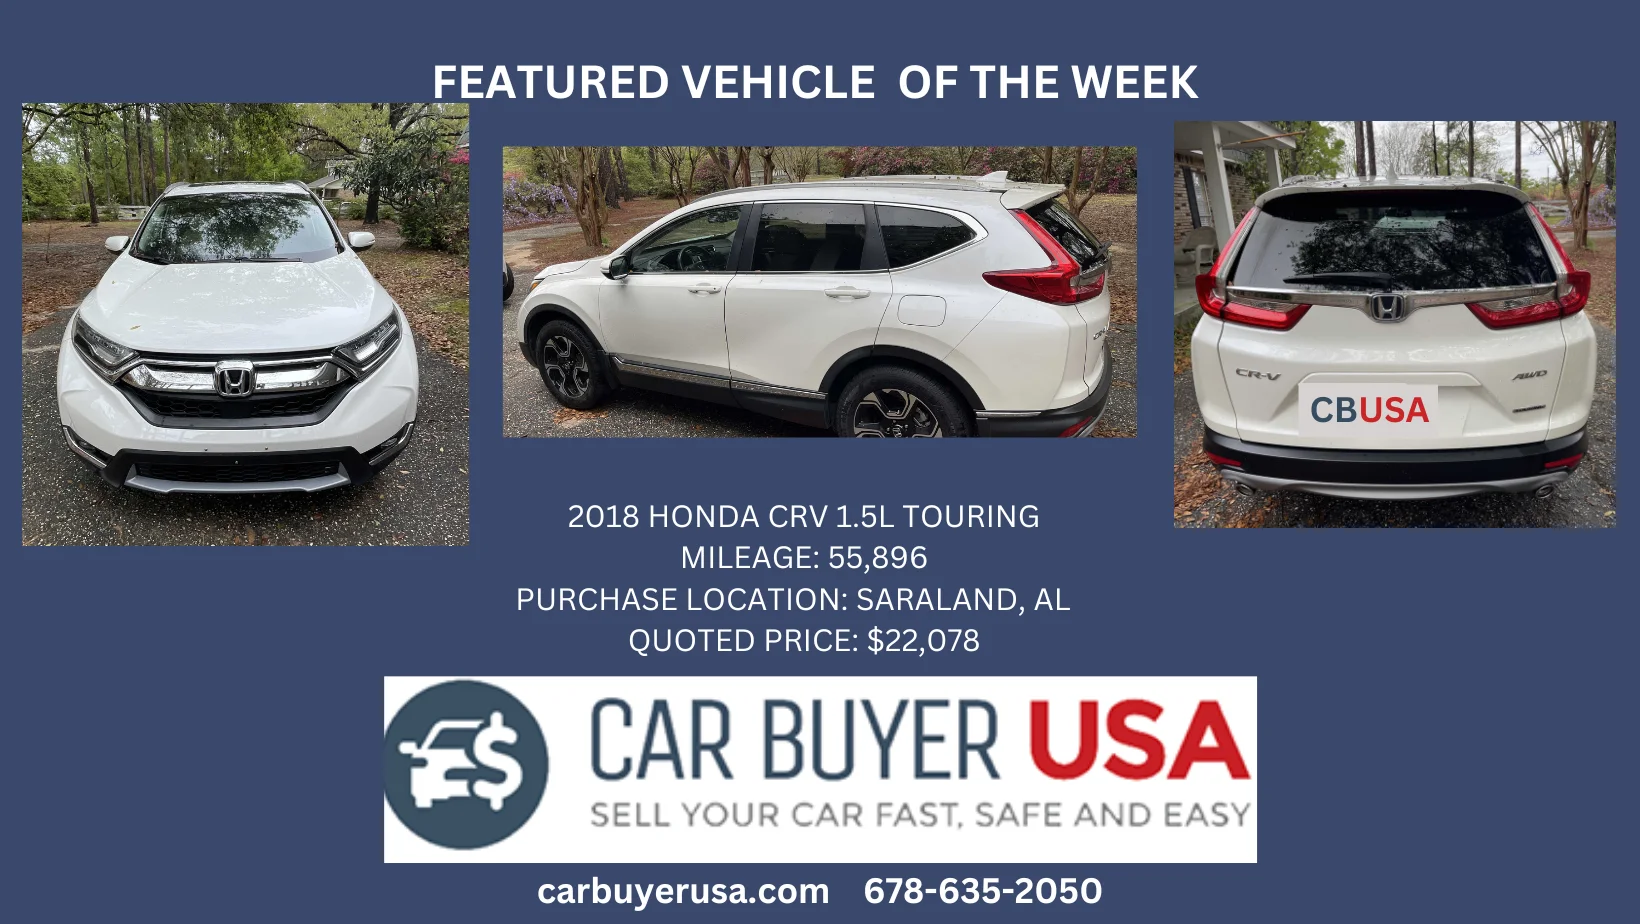 Car Buyer USA - 2018 HONDA CRV 1.5L TOURING - $22,078